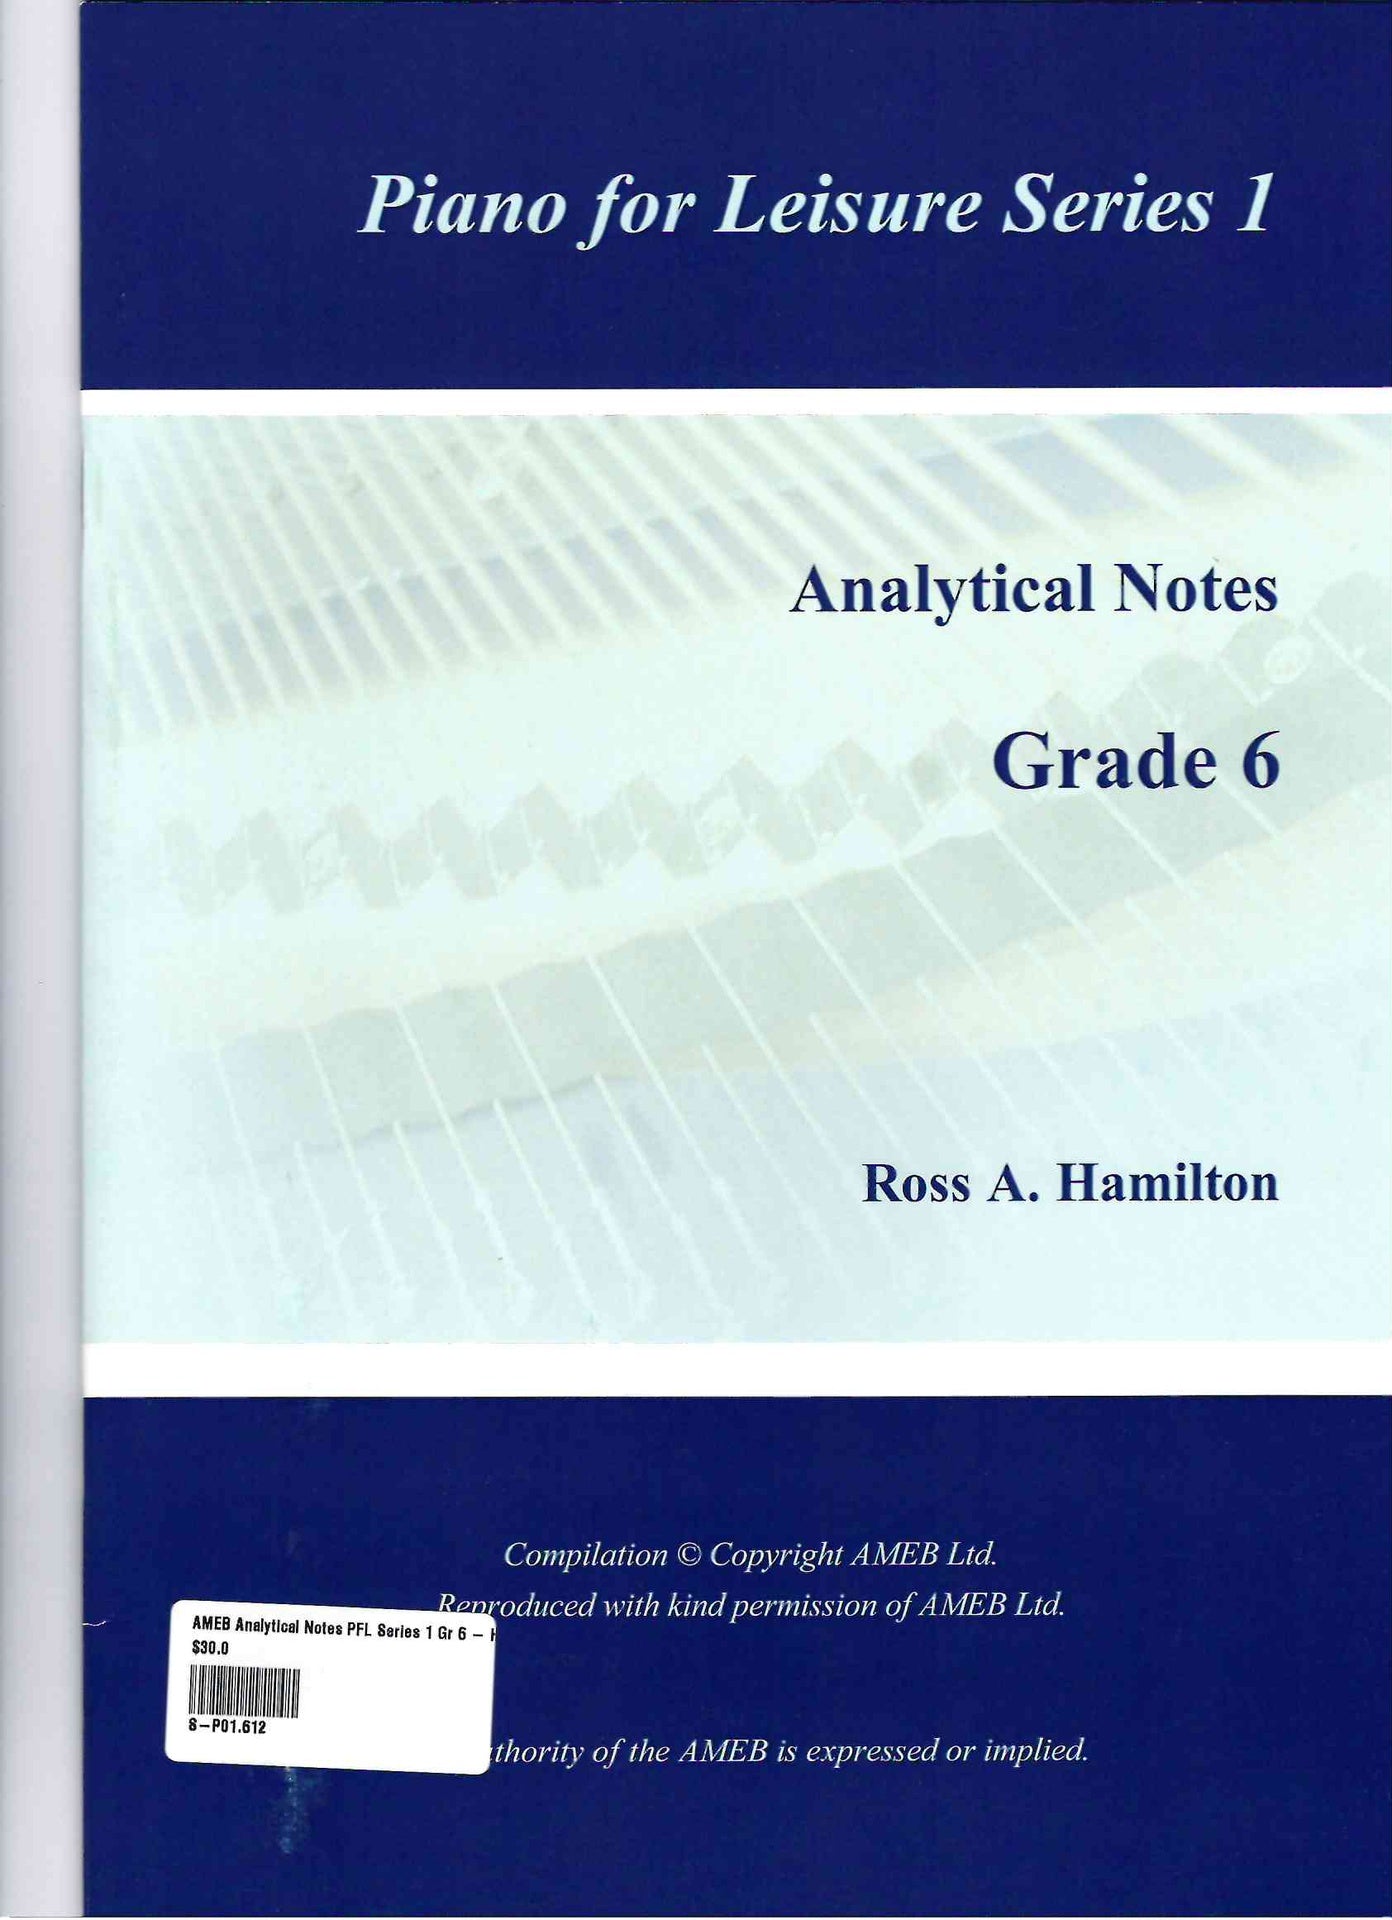 AMEB Analytical Notes PFL Series 1 Gr 6 - Hamilton Ross - Hamilton